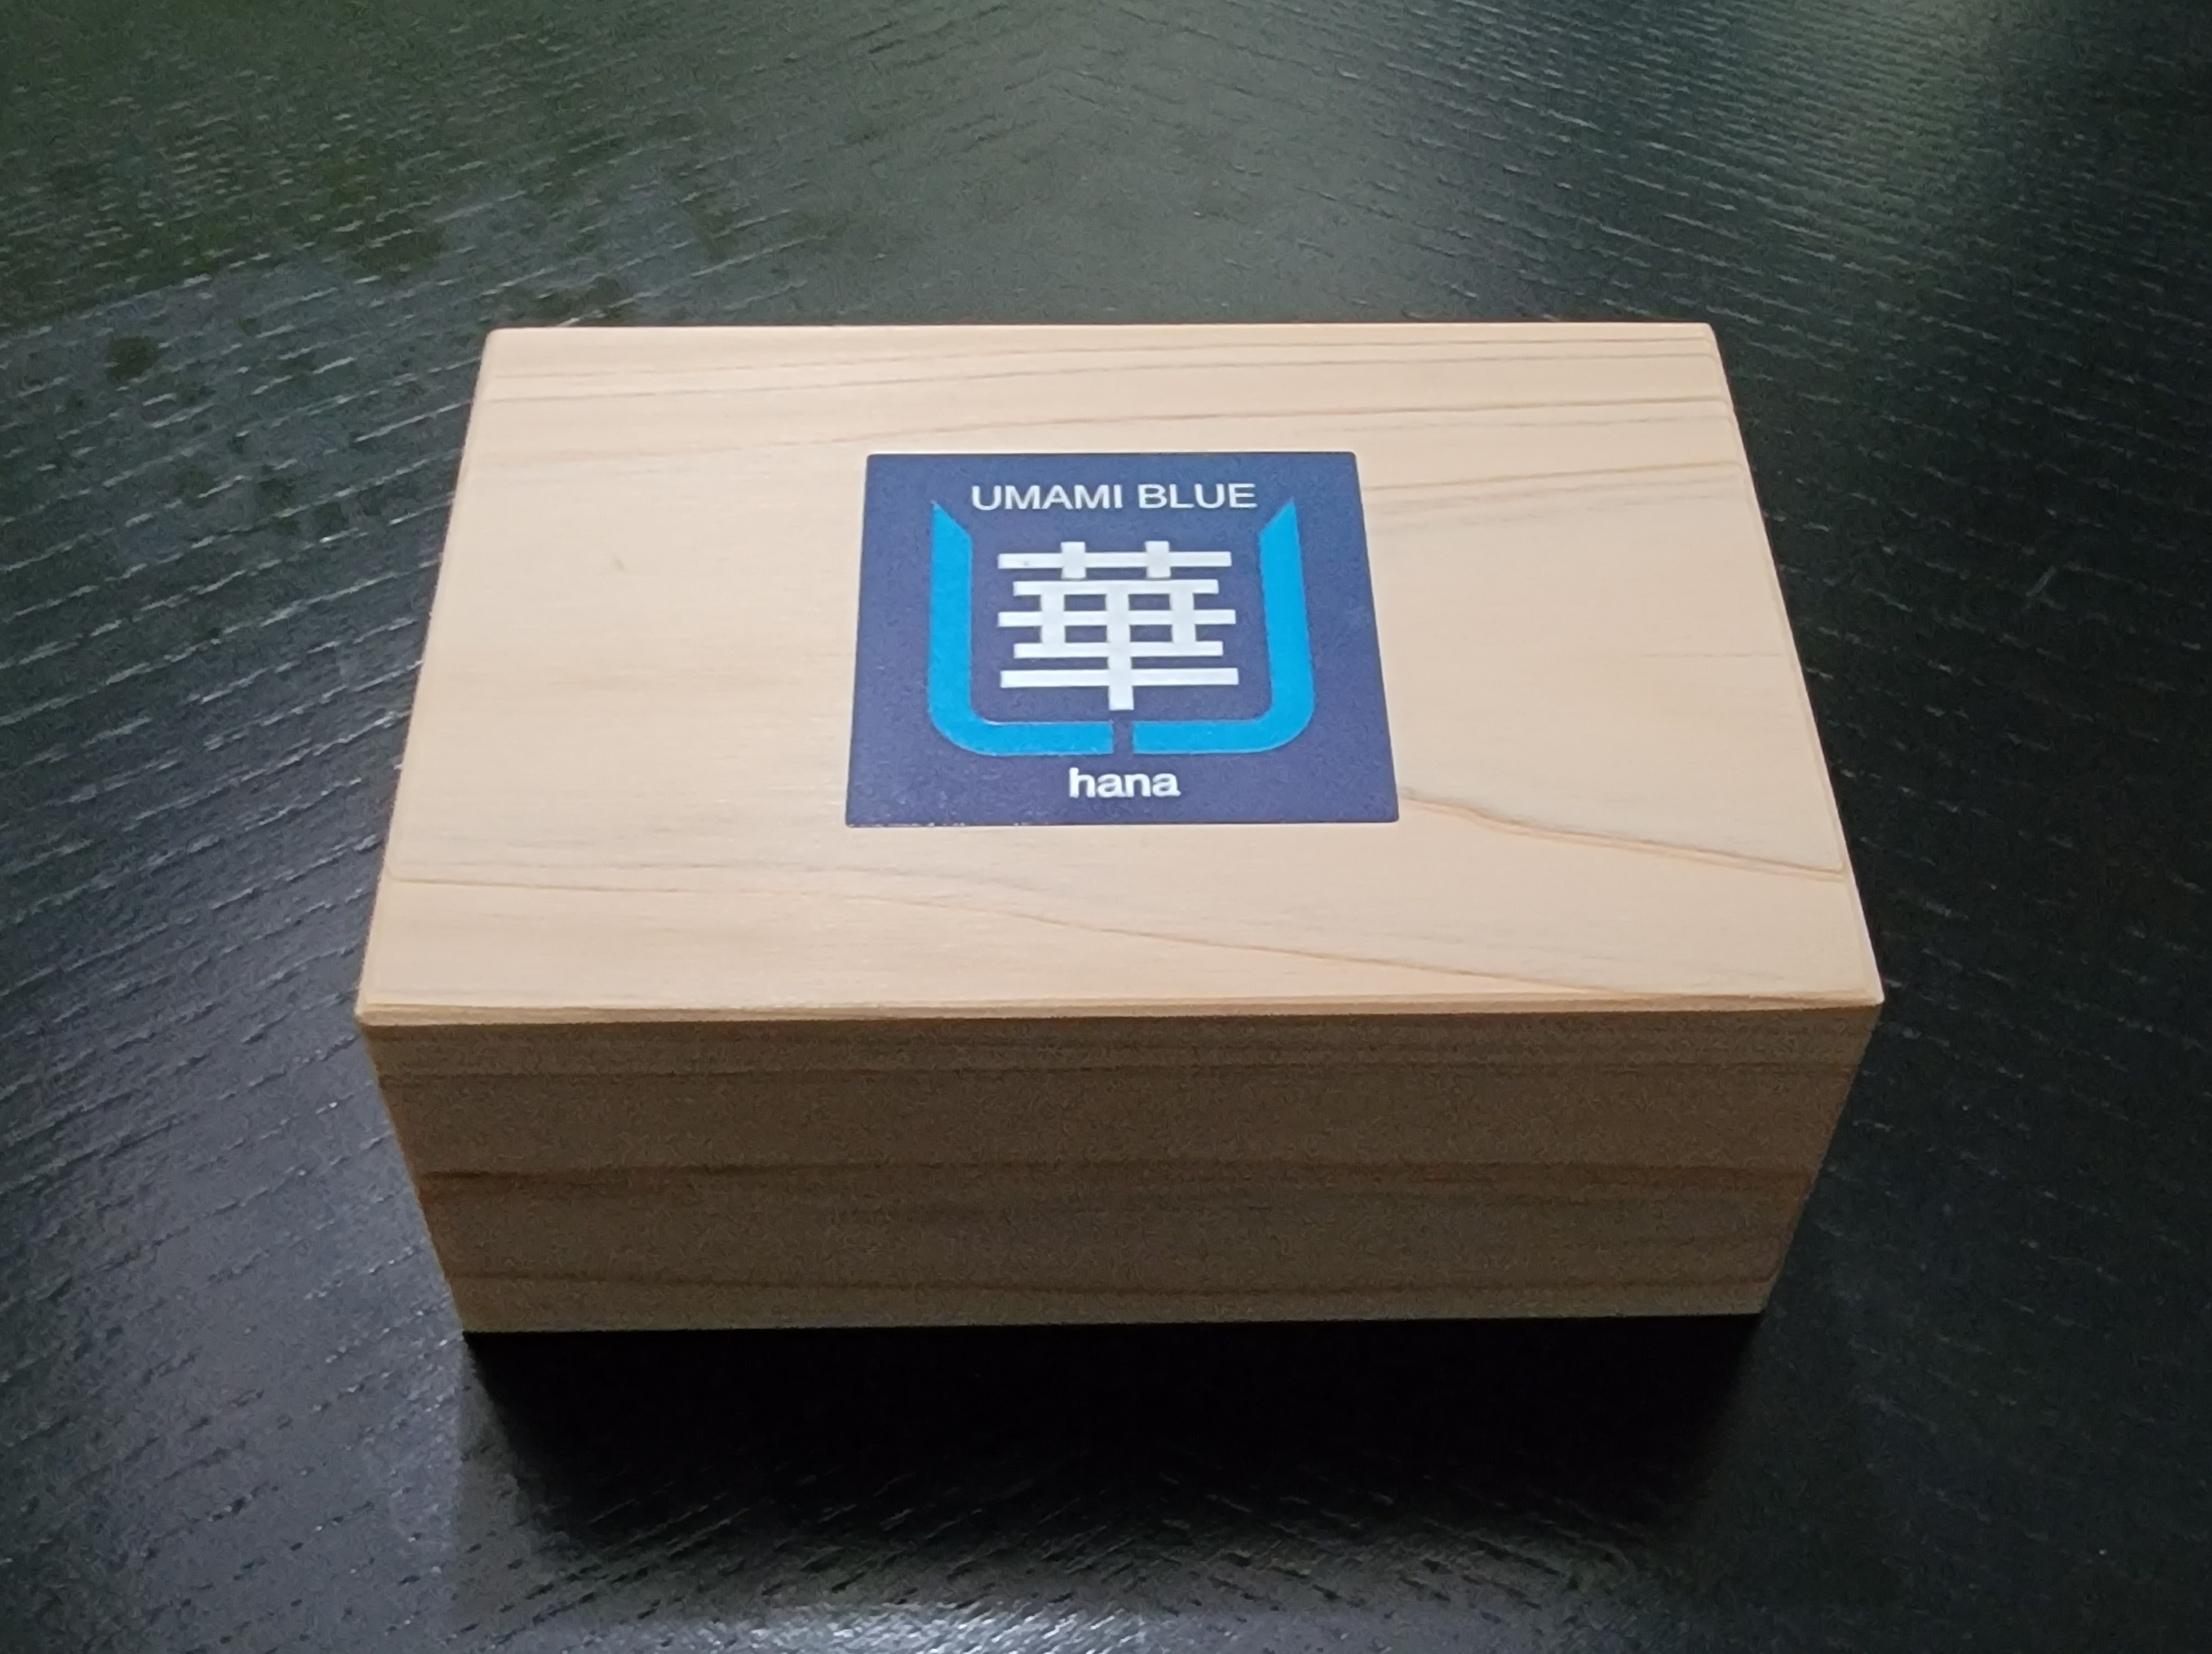 Hana Umami Blue Packaging